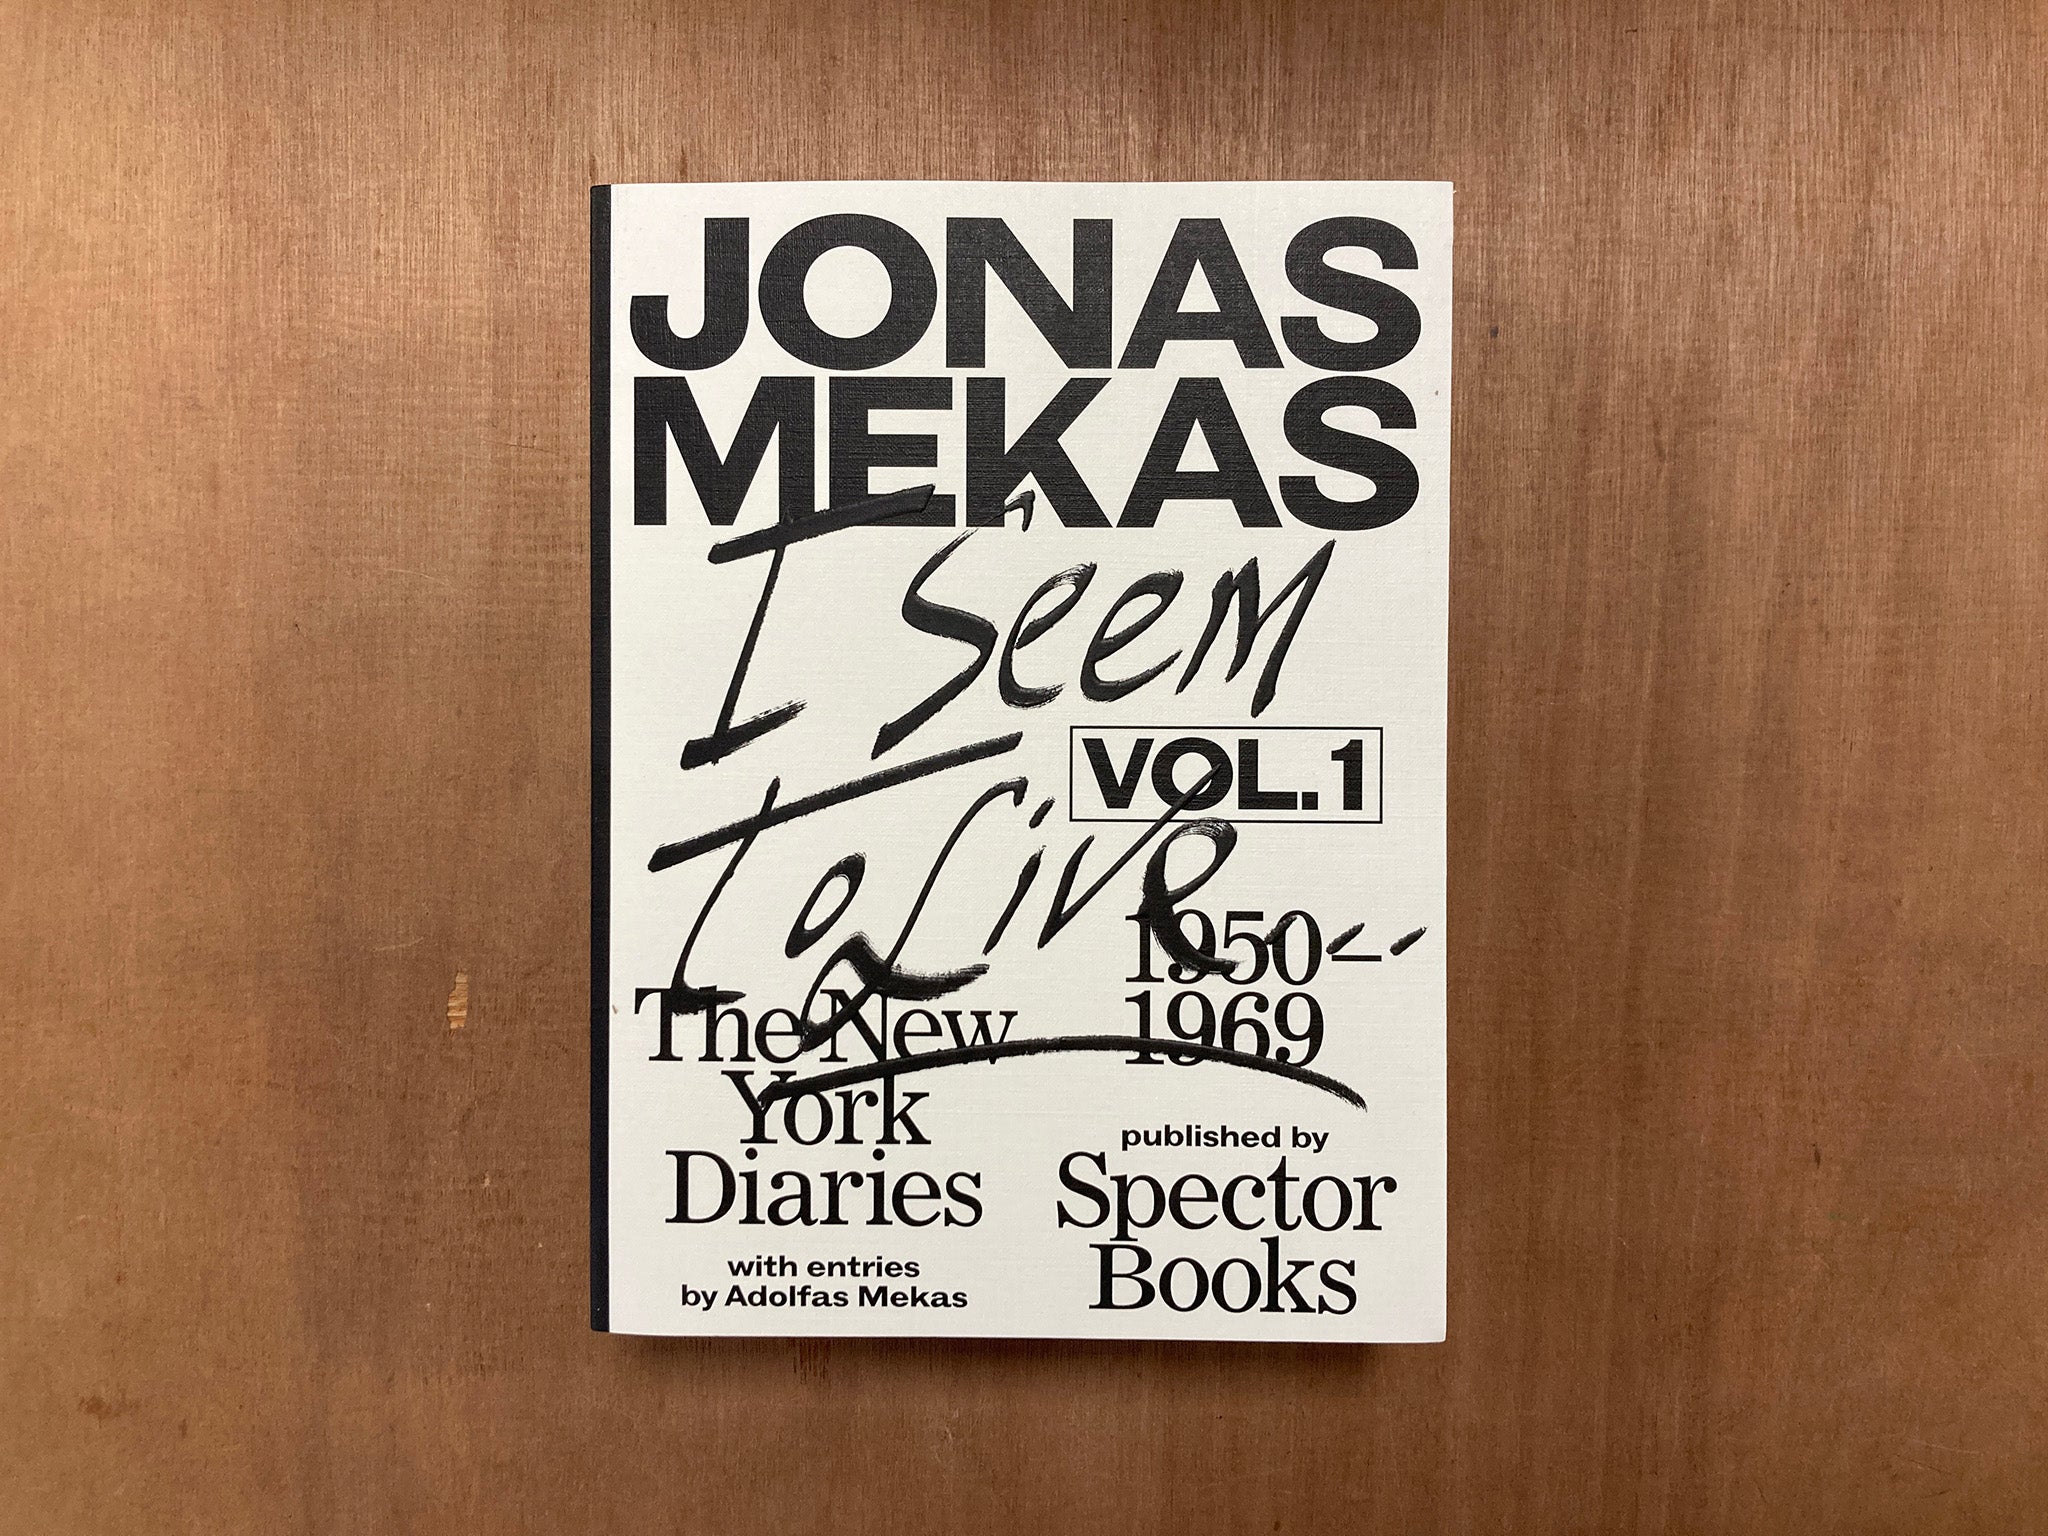 I SEEM TO LIVE: THE NEW YORK DIARIES. VOL.1 1950-1969 by Jonas Mekas